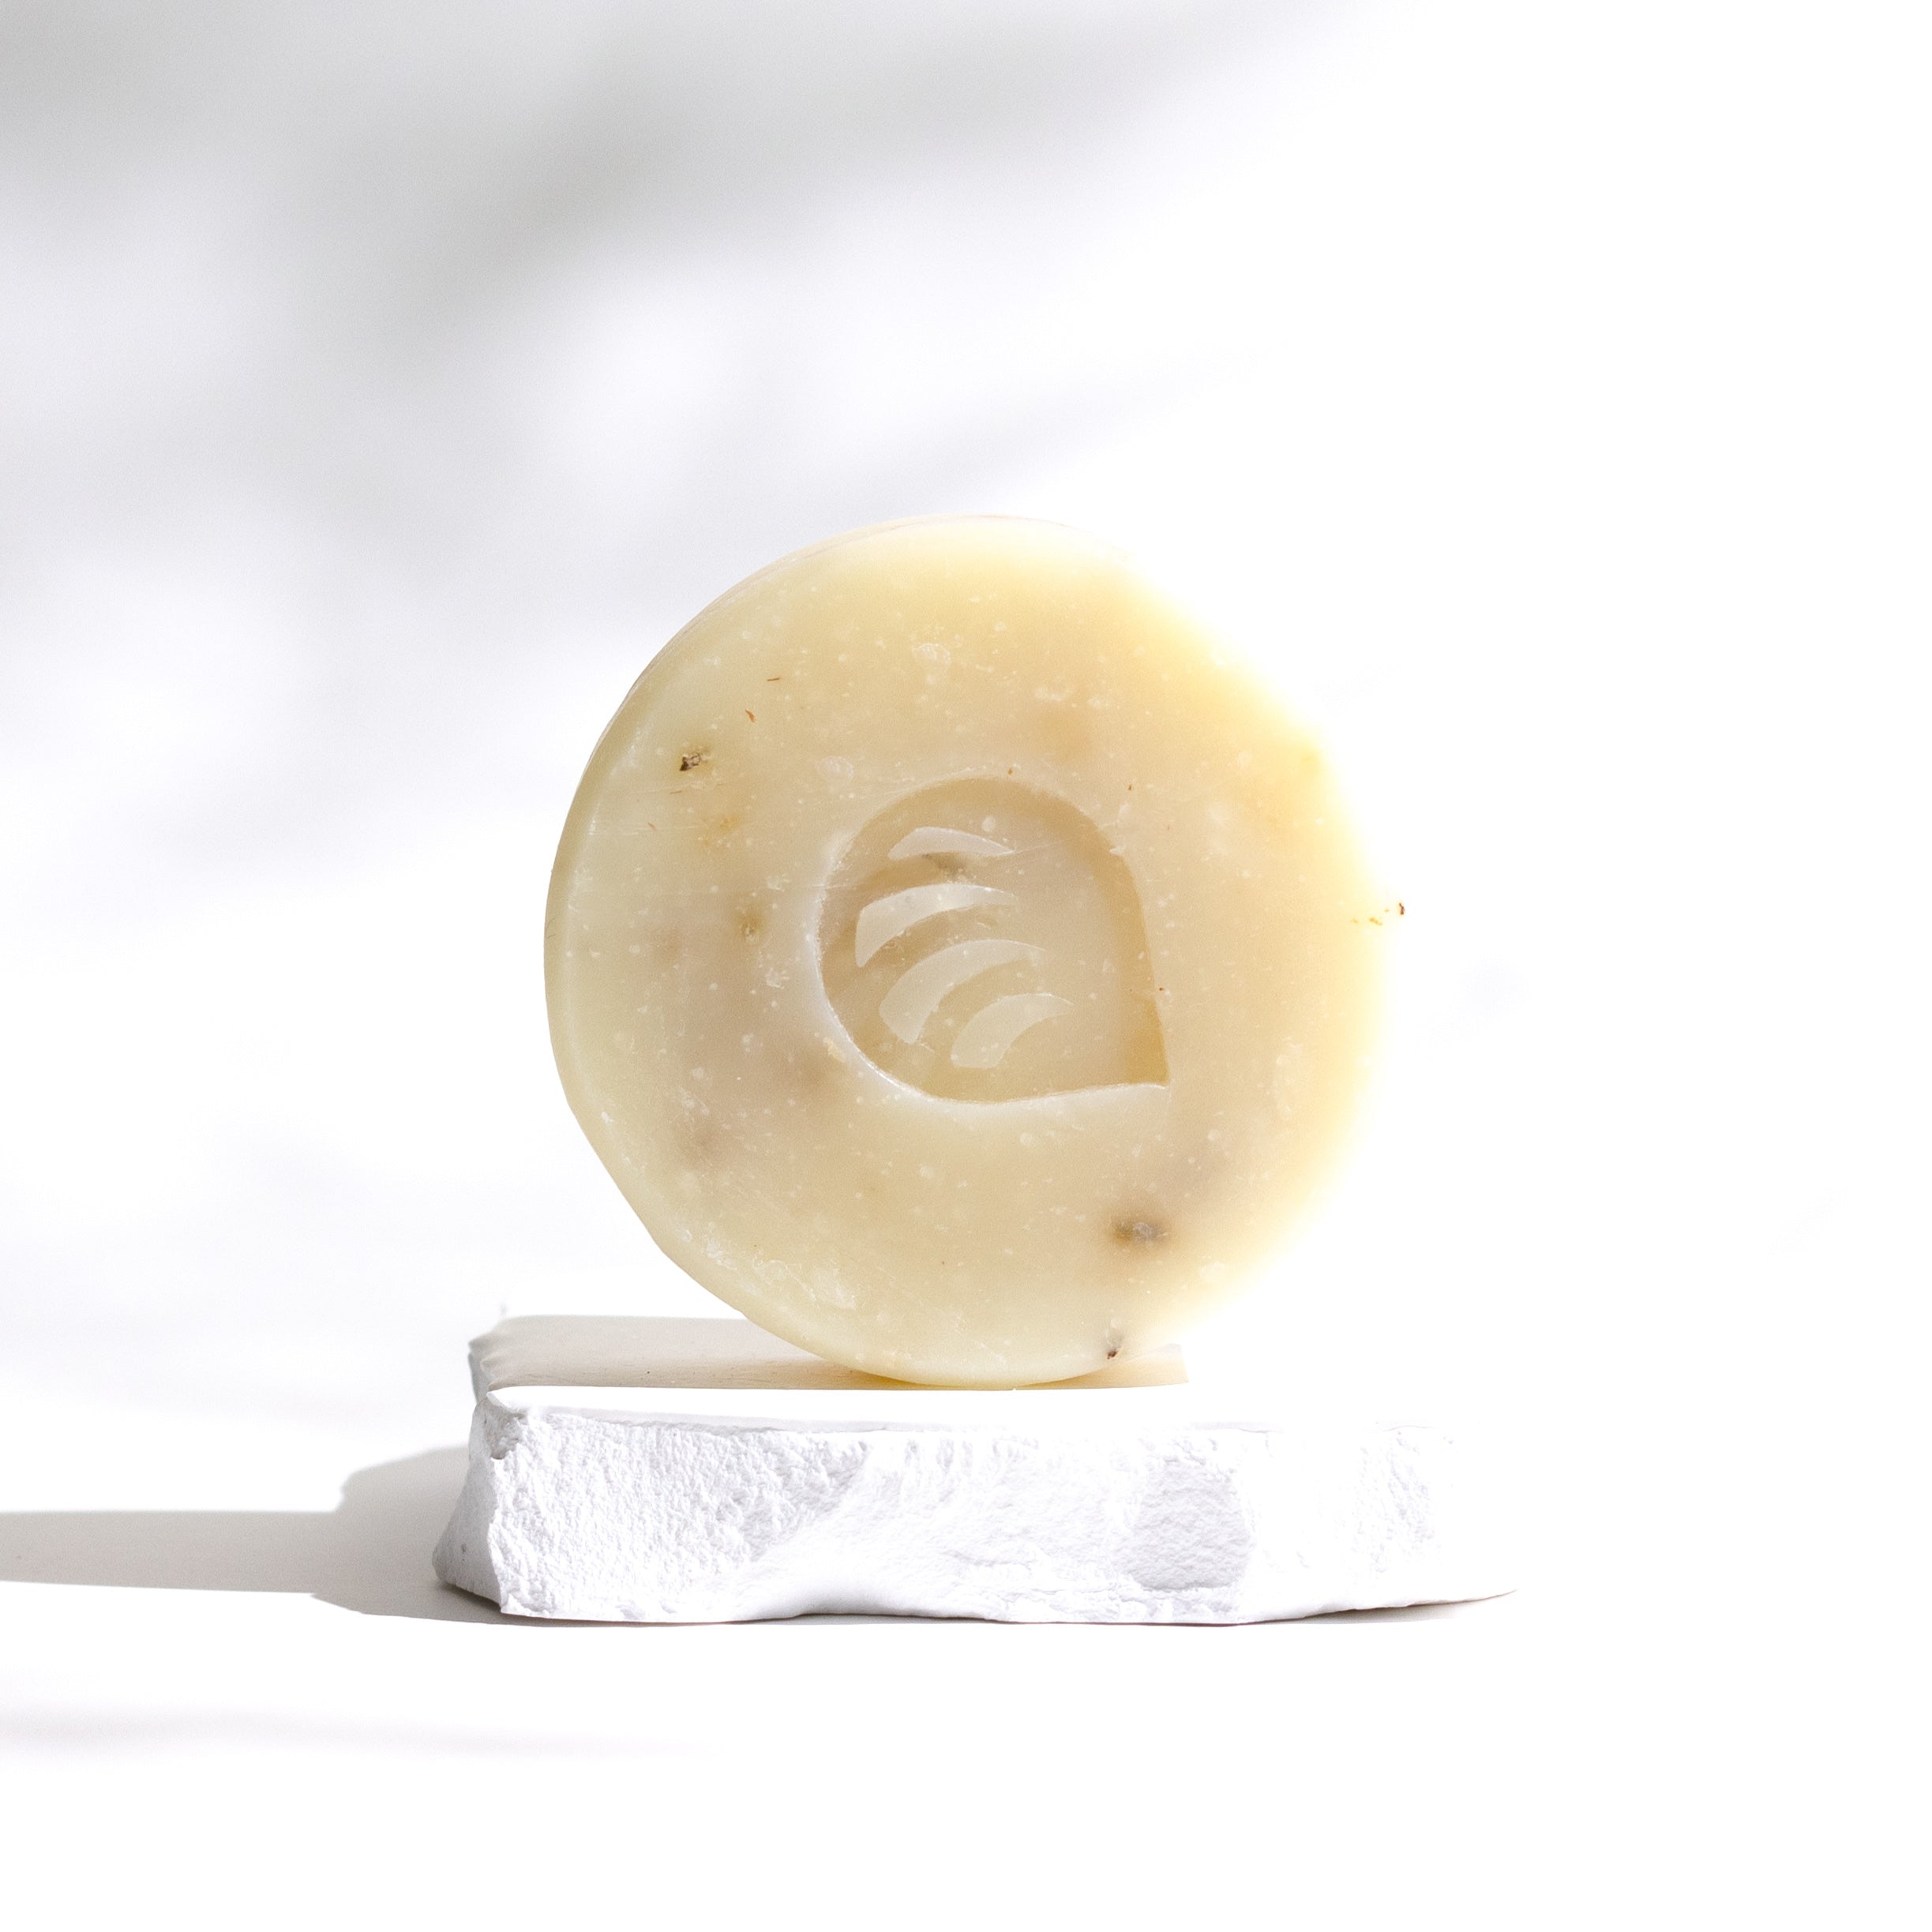 Lavami Lavender Soap - Bar soap made in Calgary